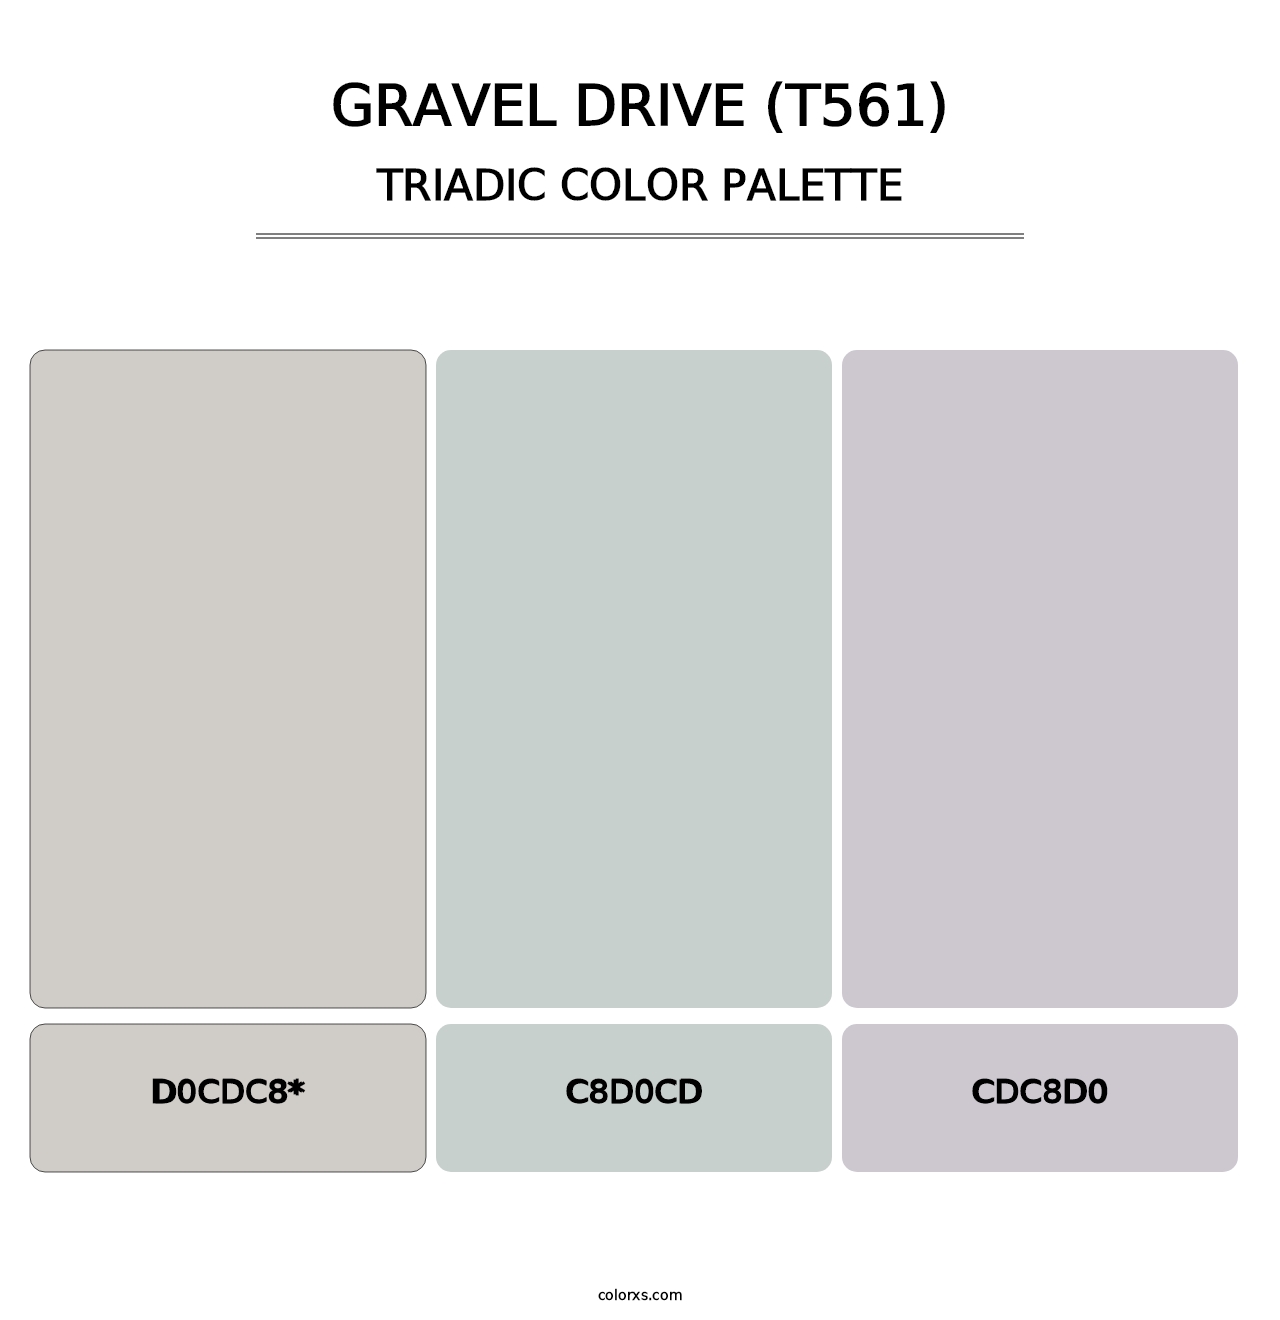 Gravel Drive (T561) - Triadic Color Palette